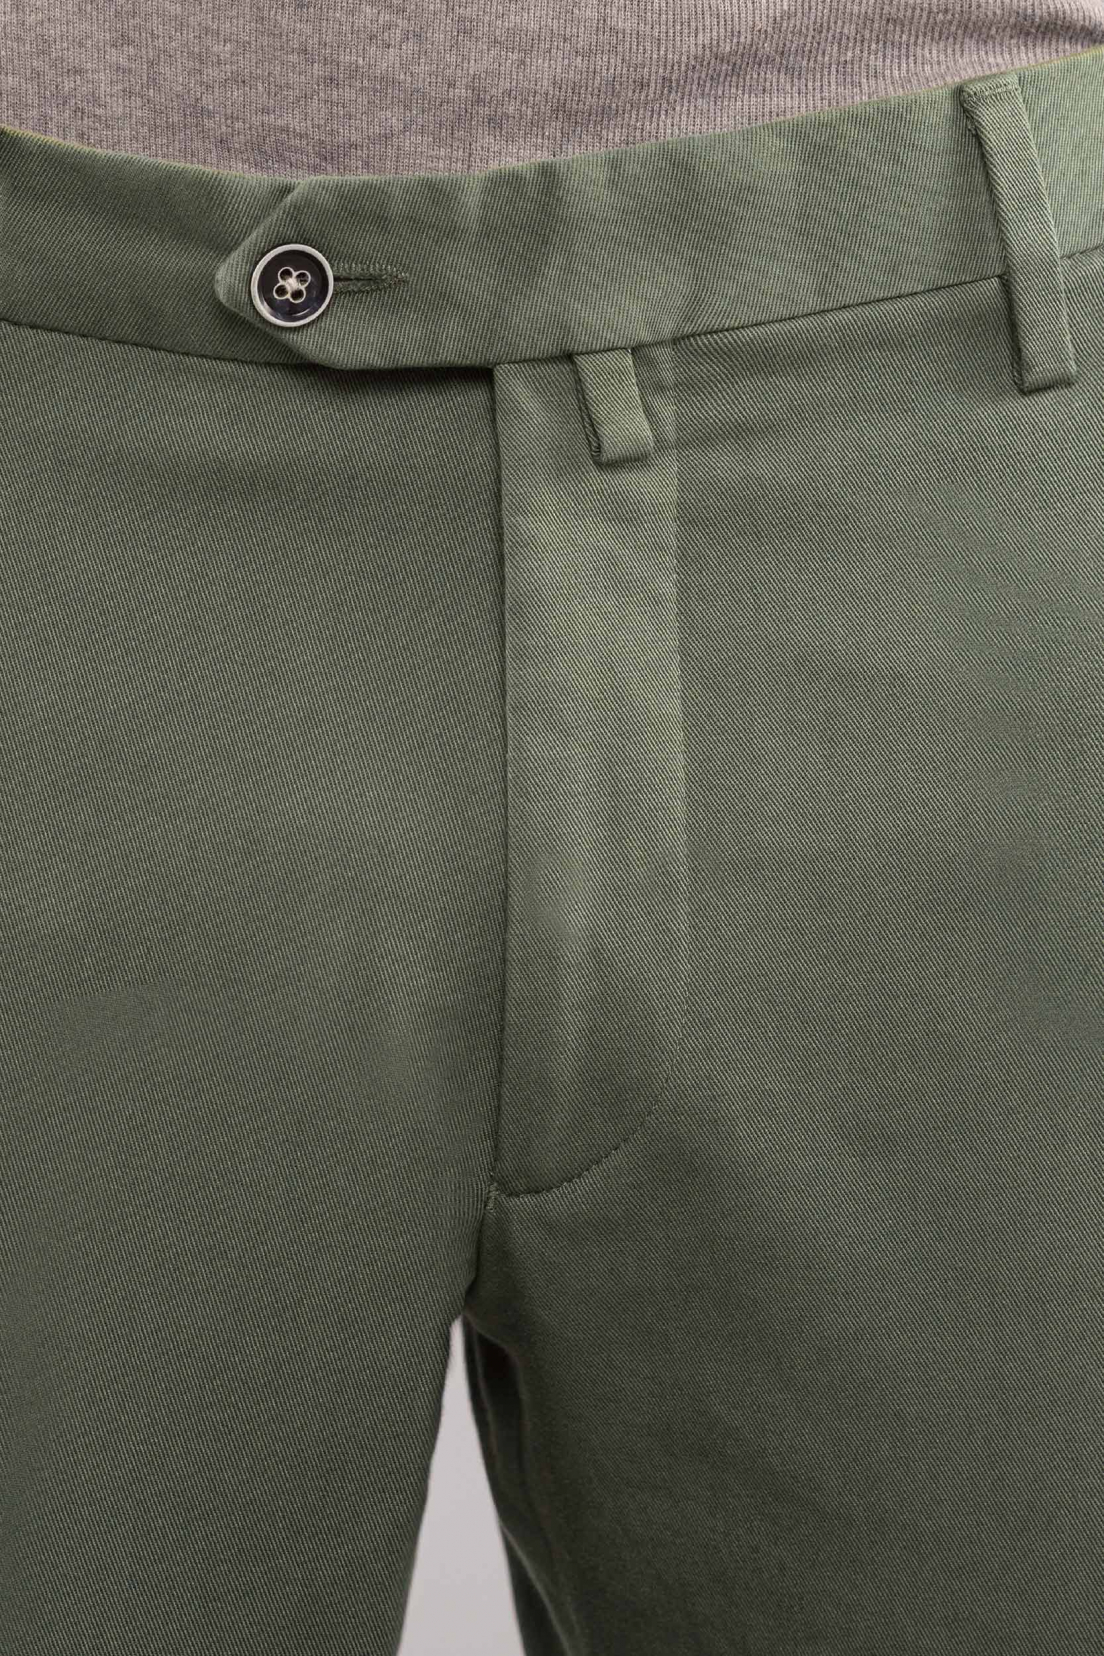 LePantalon: olive green chinos trousers